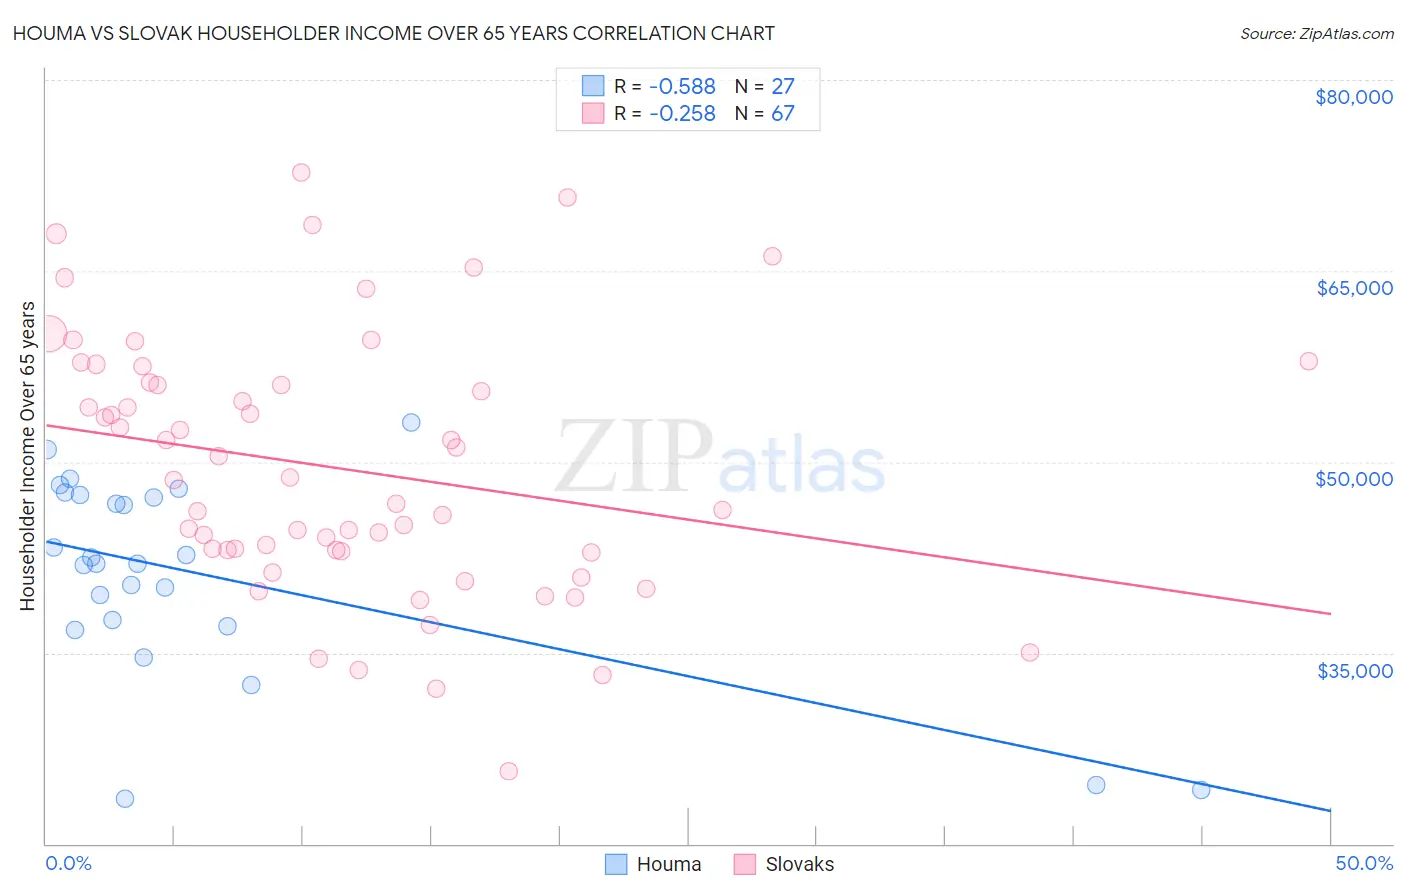 Houma vs Slovak Householder Income Over 65 years